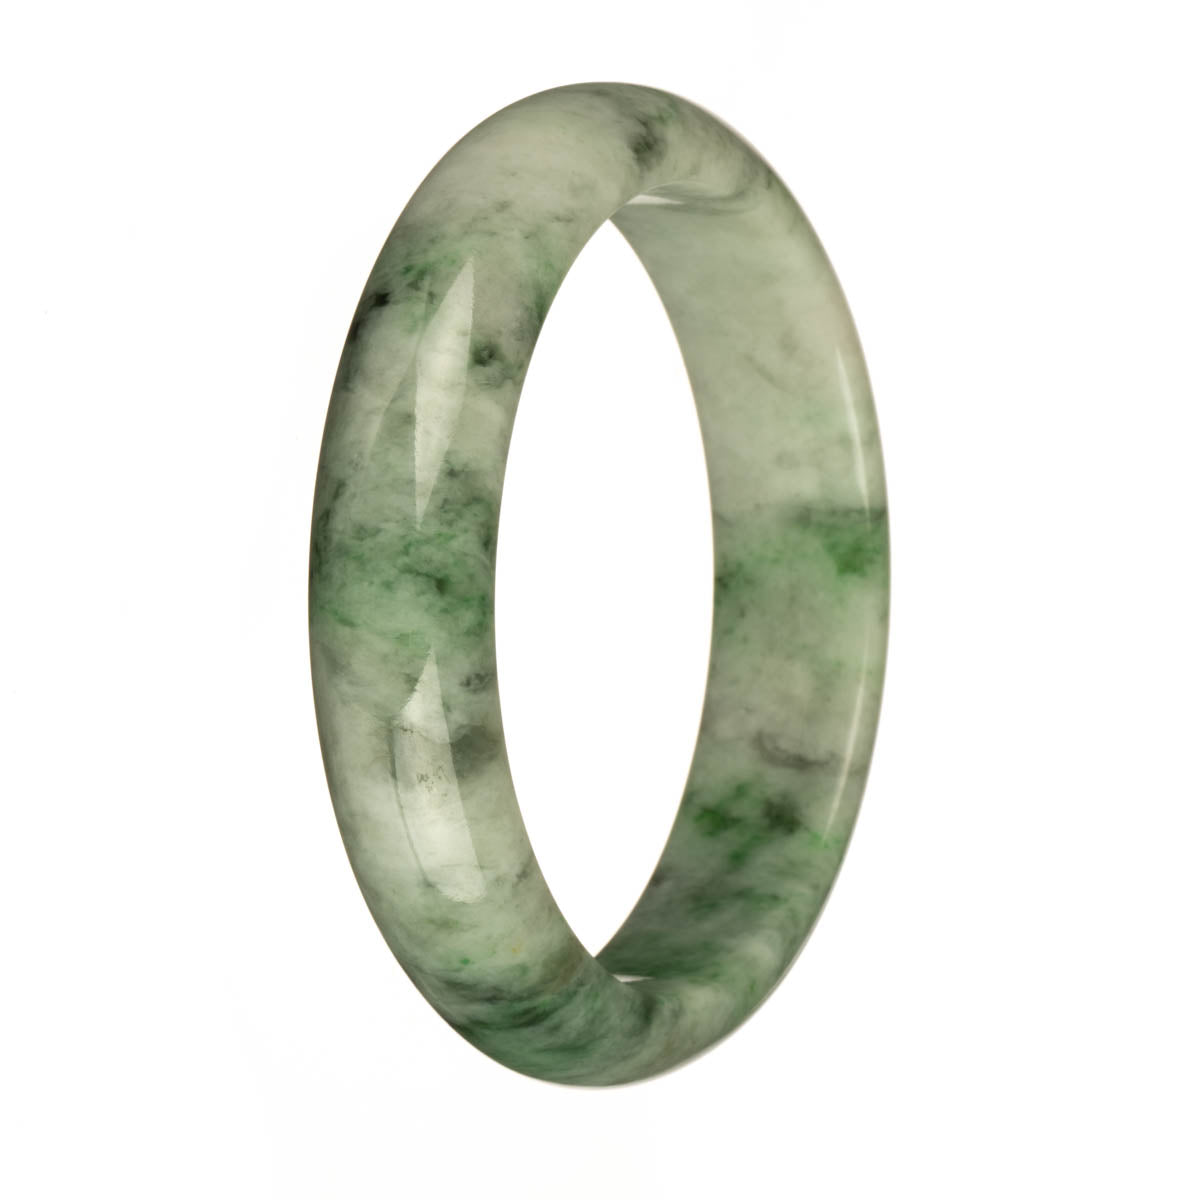 62.6mm Greyish White with Apple Green and Dark Green Patterns Jade Bangle Bracelet